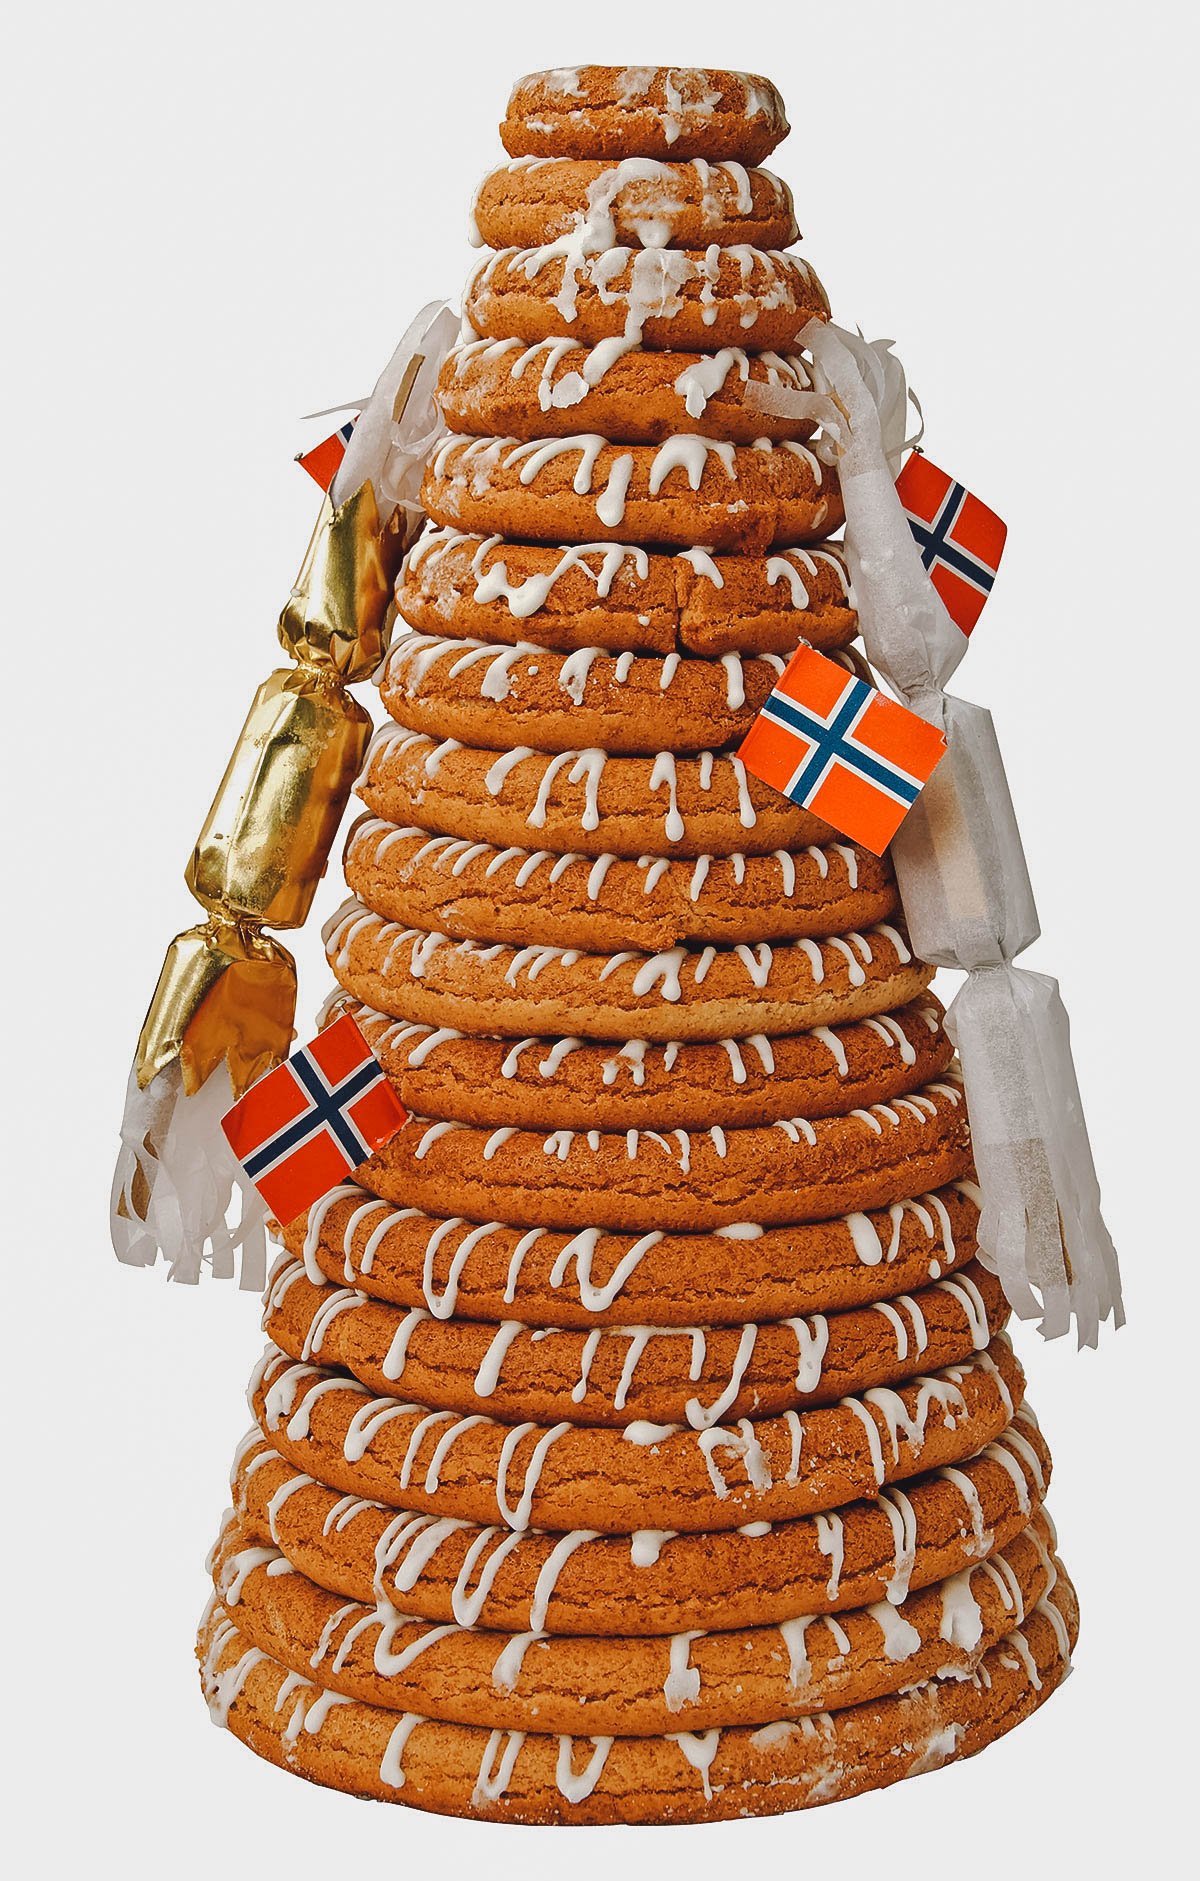 Kransekake, a traditional Norwegian wreath cake